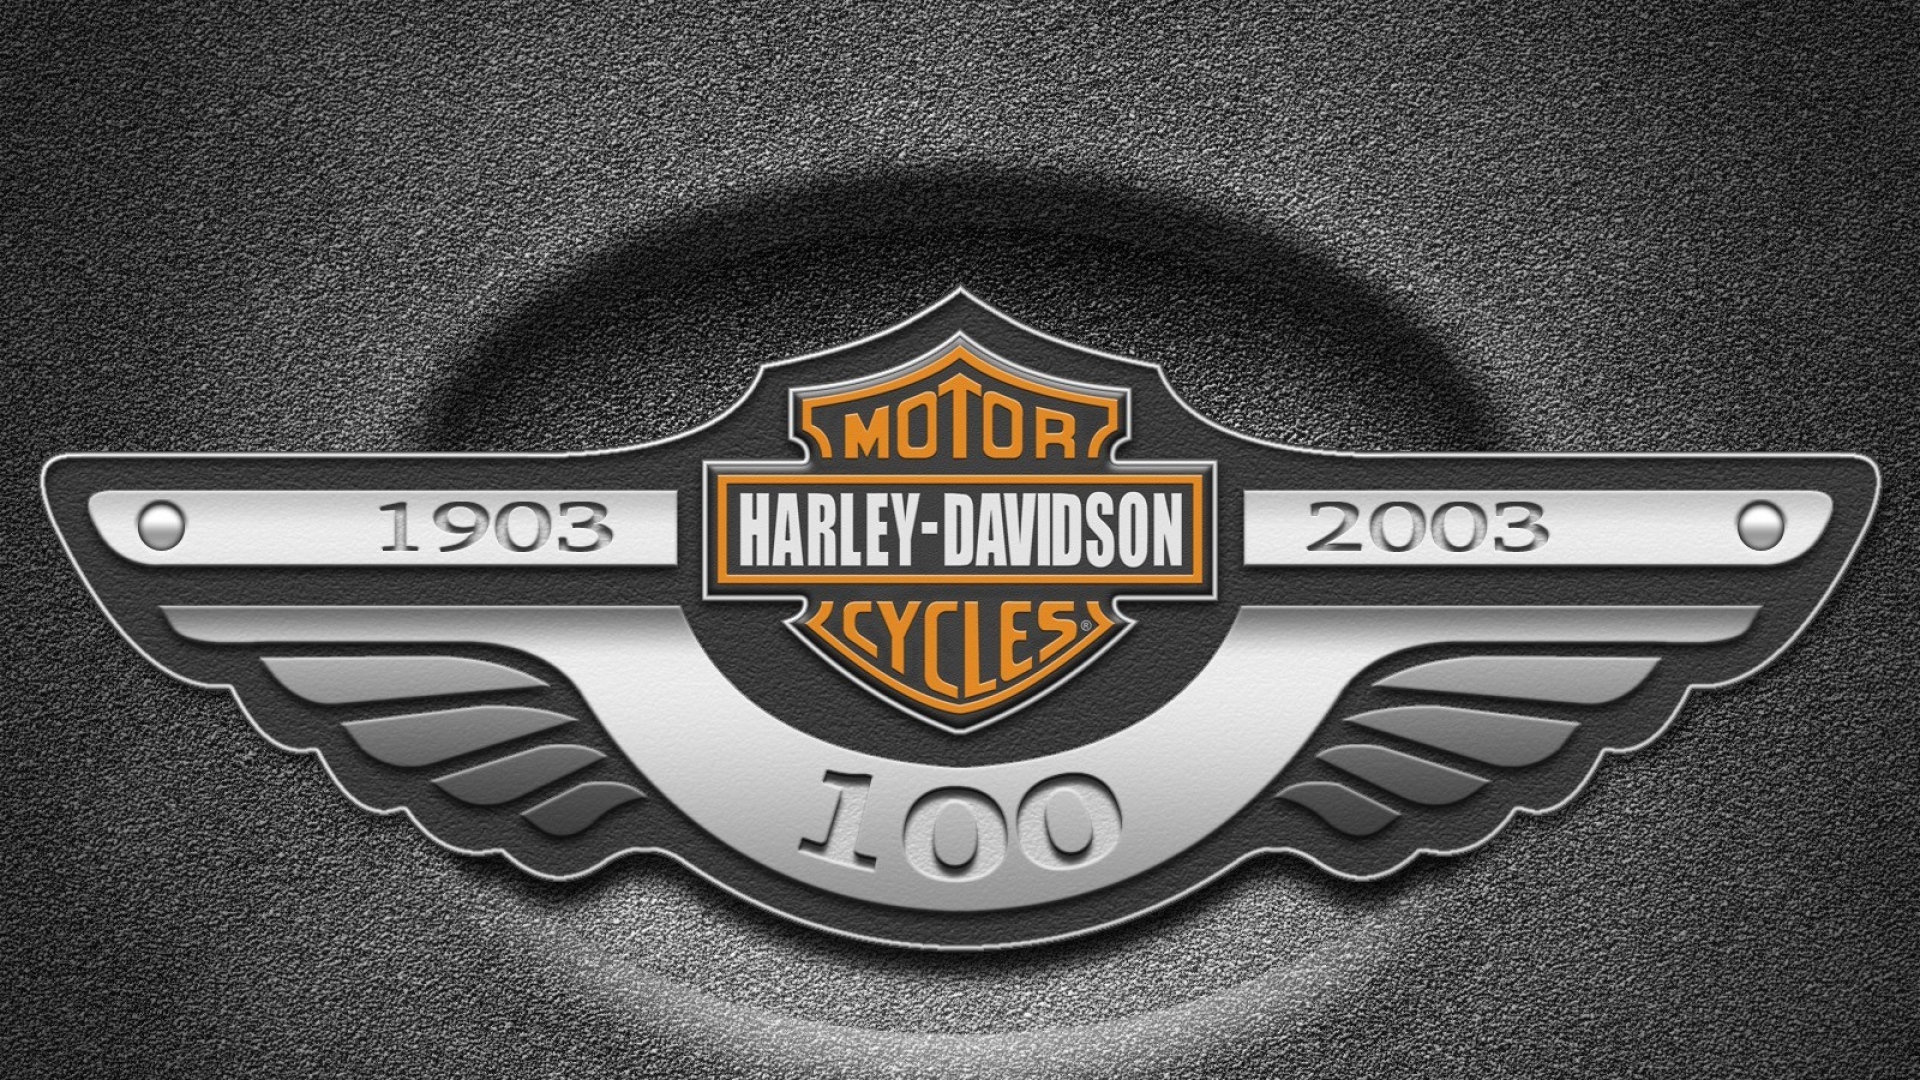 Harley Davidson Motorcycles Brand Firm Wallpaper